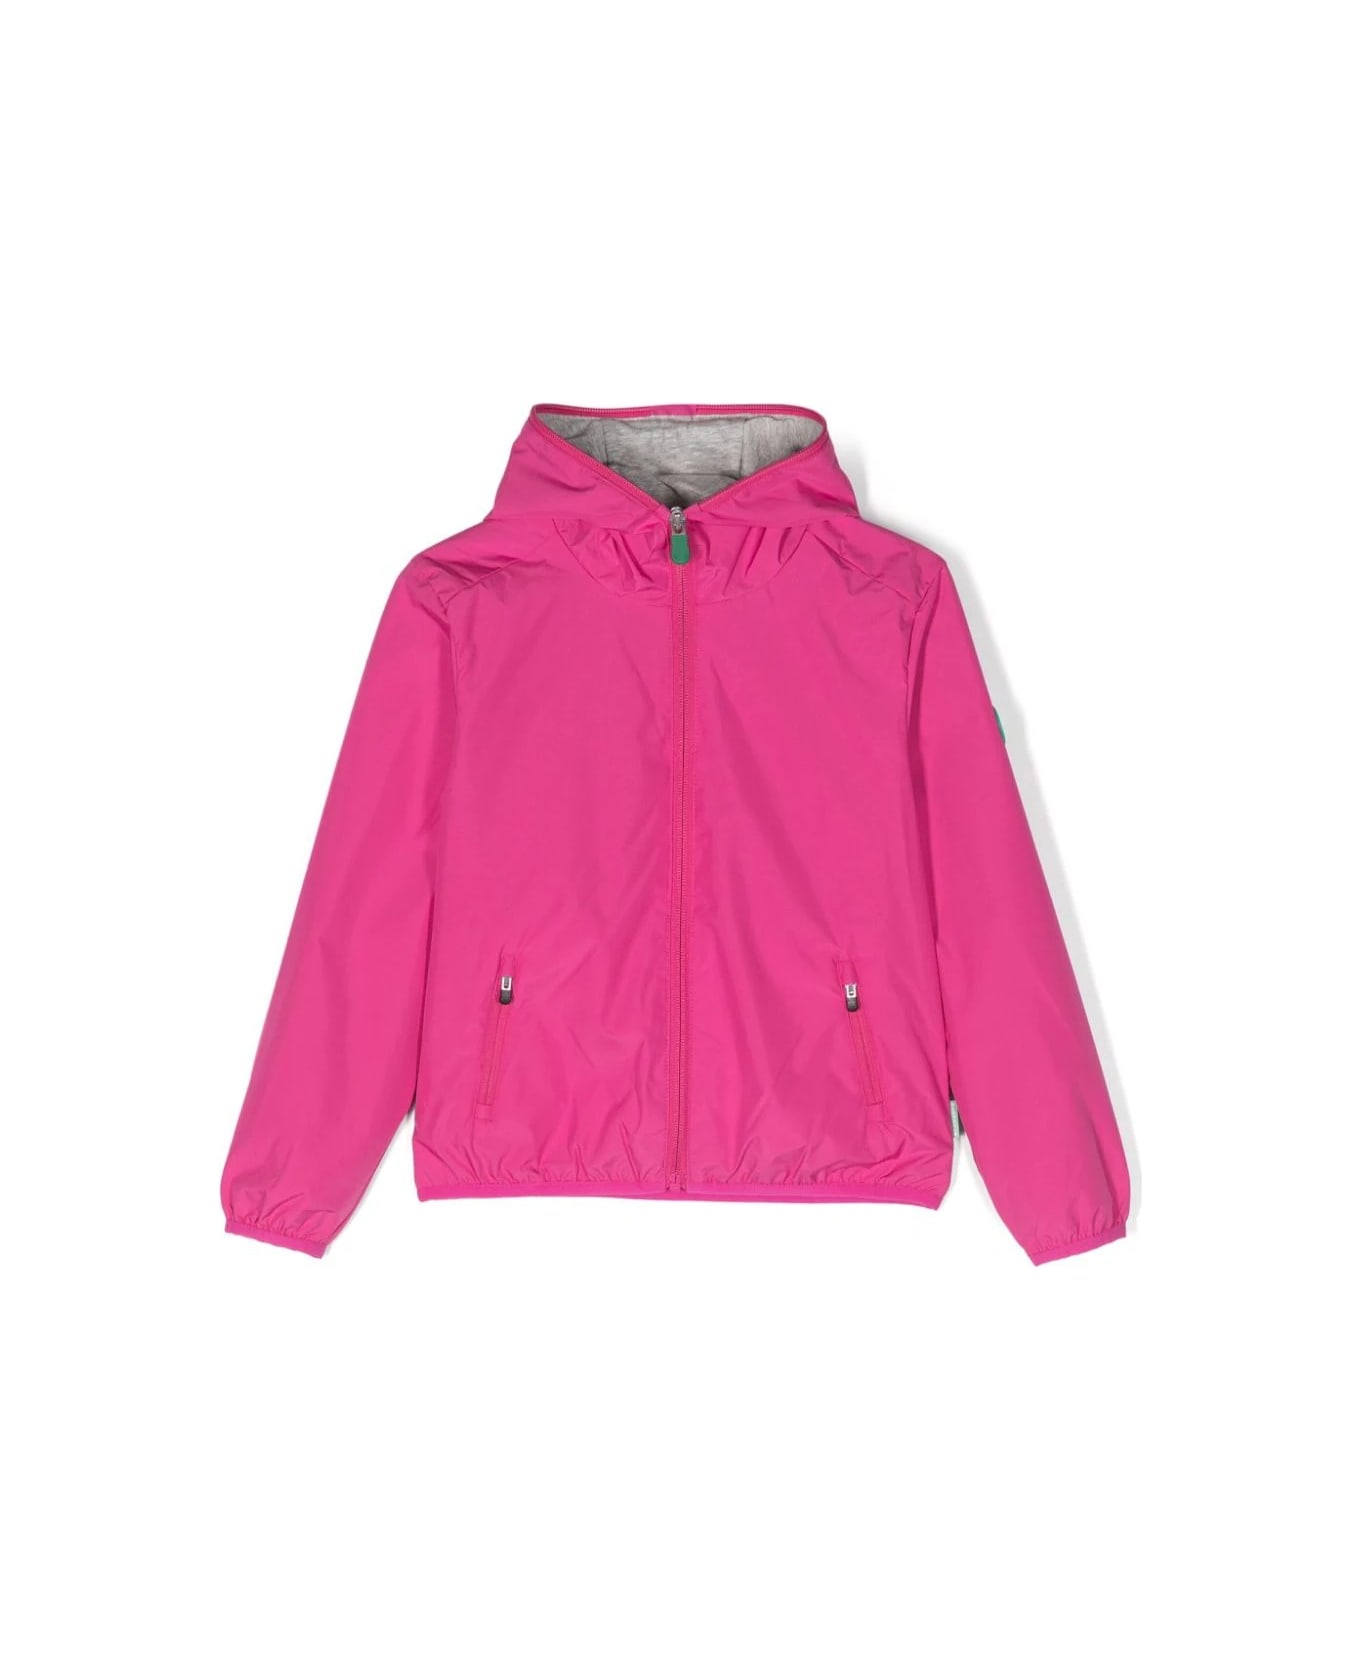 Save the Duck Hooded Windbreaker Jacket In Fuchsia - Pink